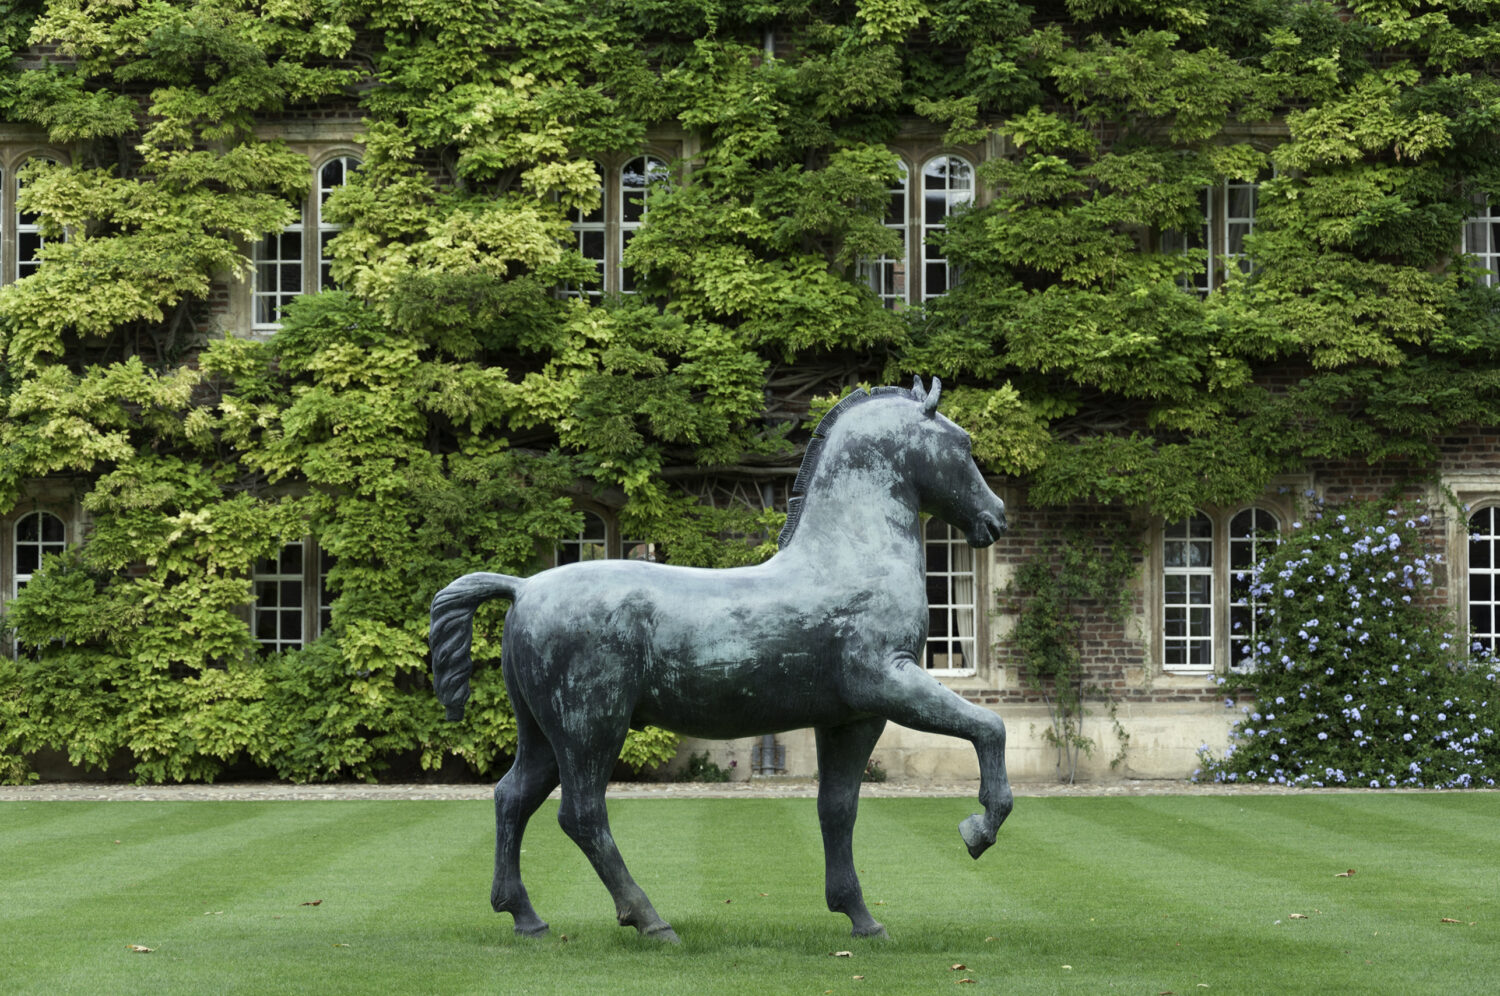 ‘Bronze Horse’ (1983) by Barry Flanagan at Jesus College, Cambridge https://www.barryflanagan.com/artworks/bronze-horse/